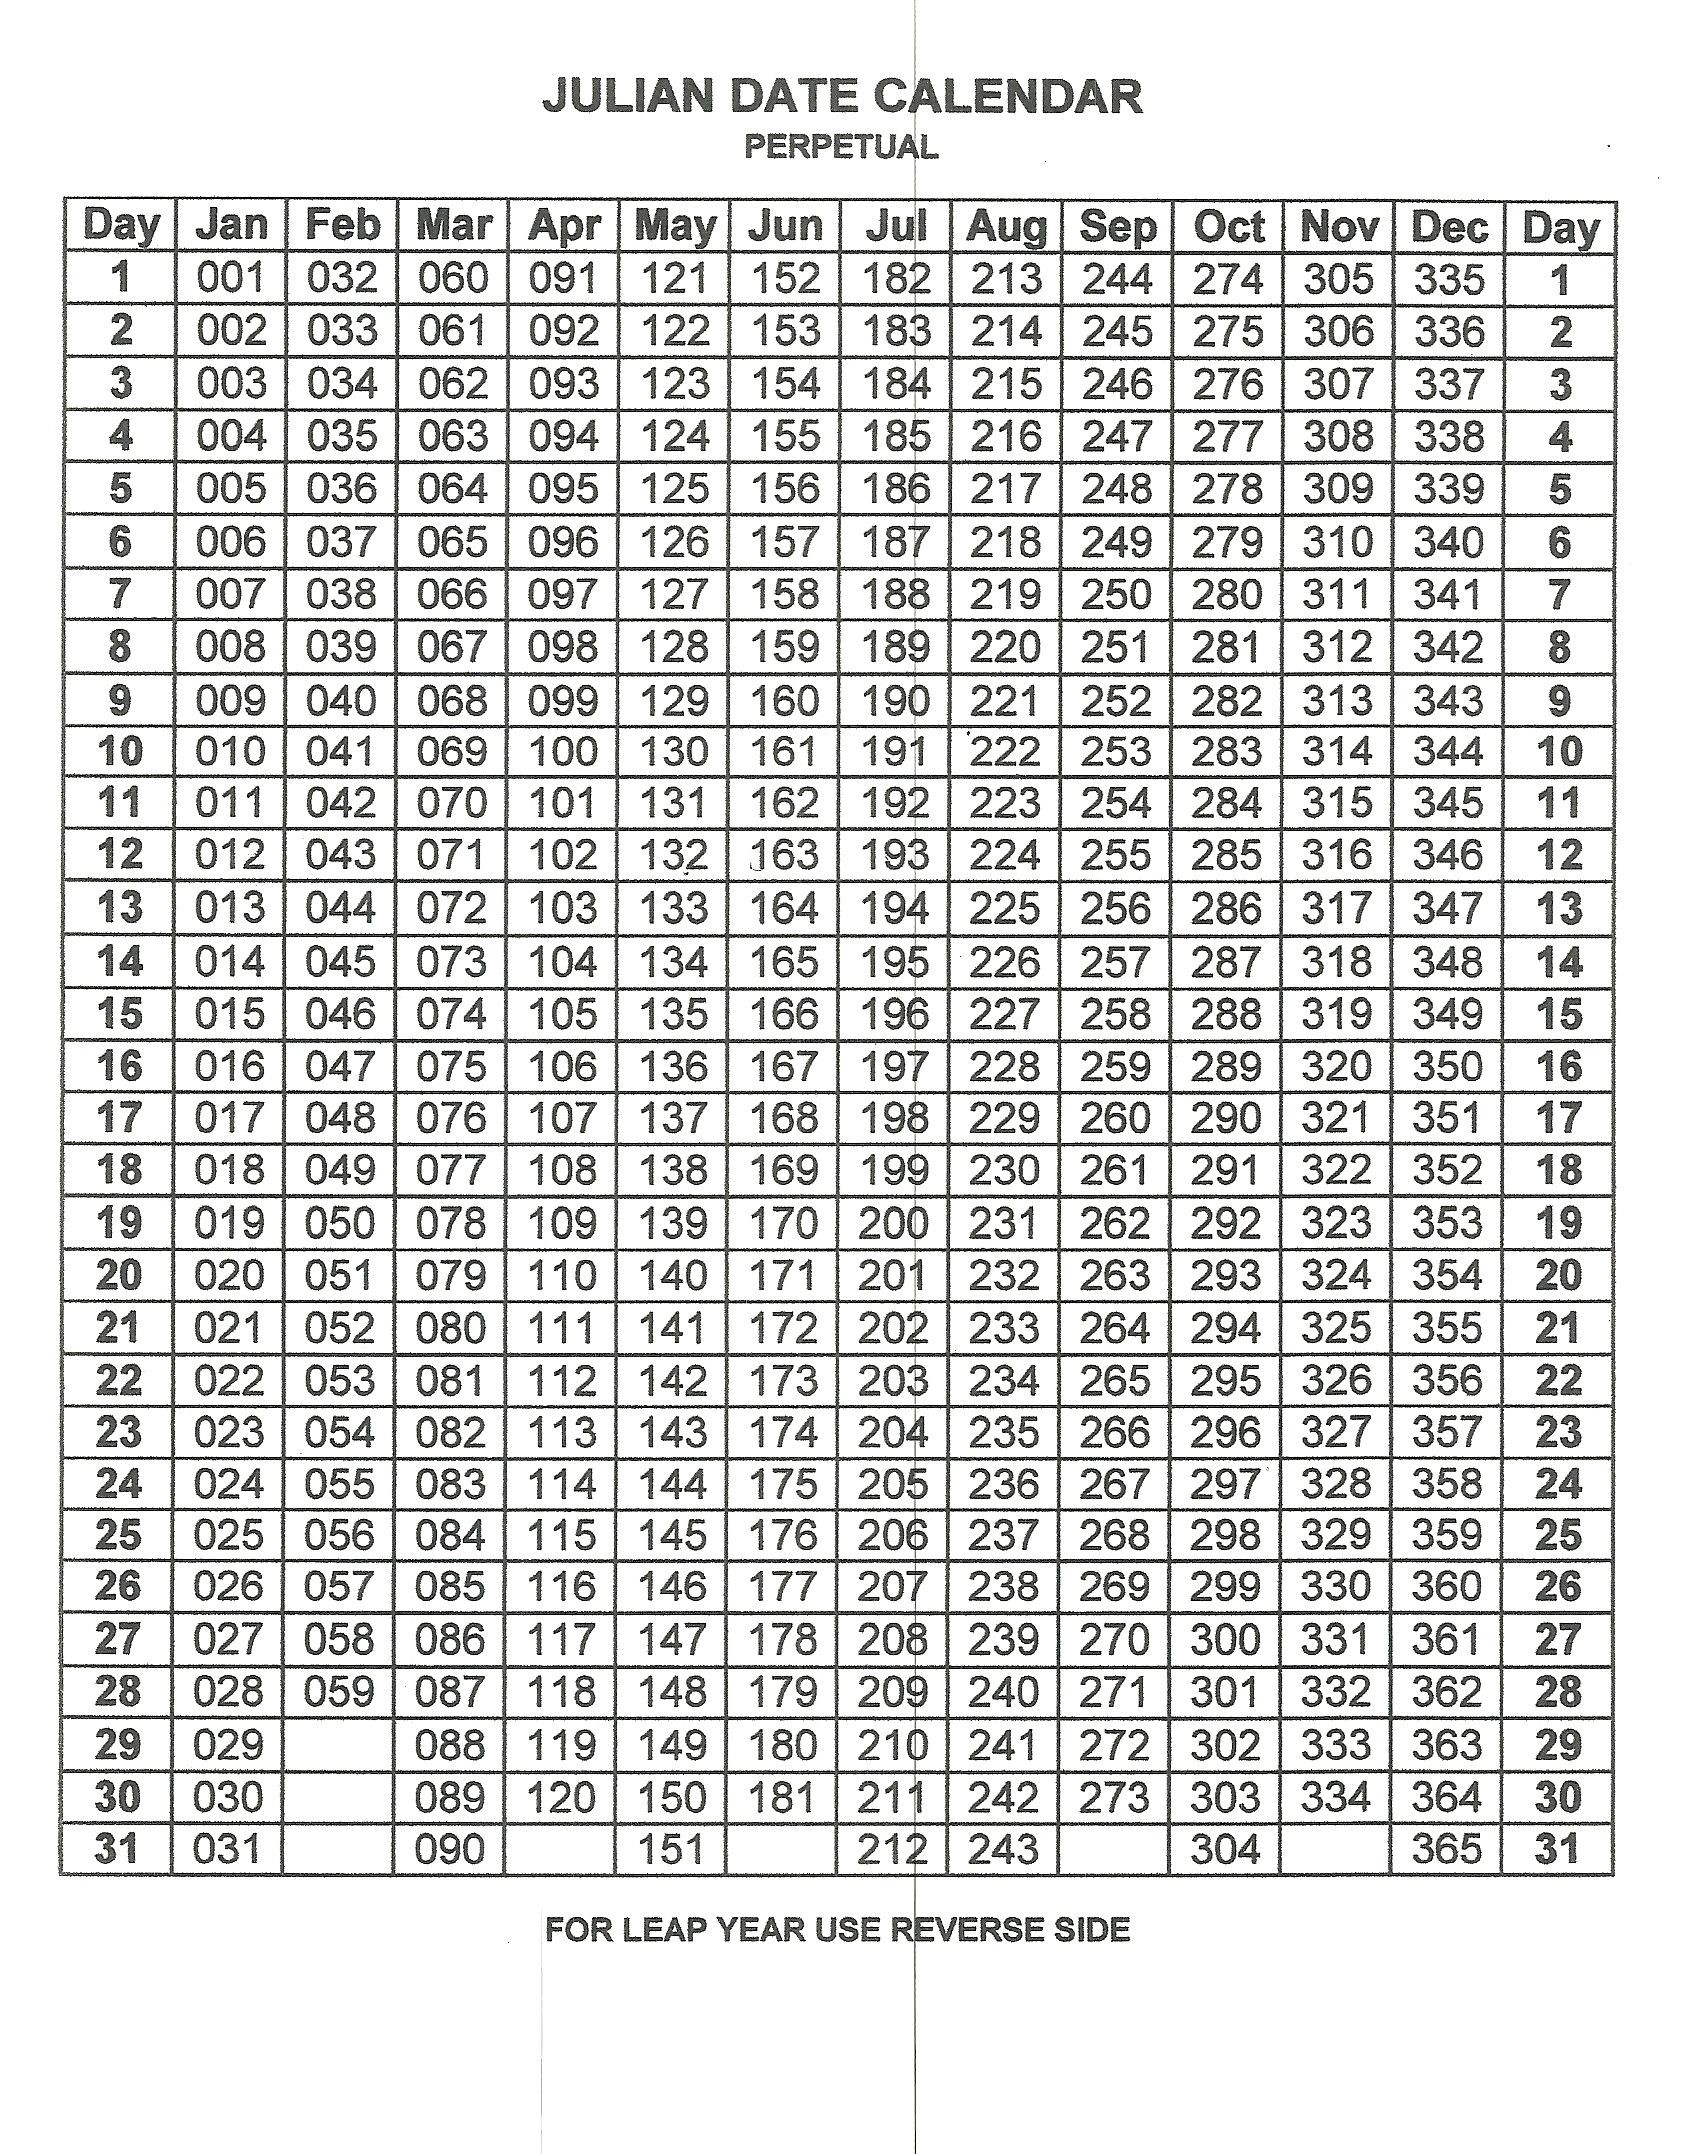 Perpetual Julian Date Calendar | Calendar Printables  2020 Julian Date Calendar